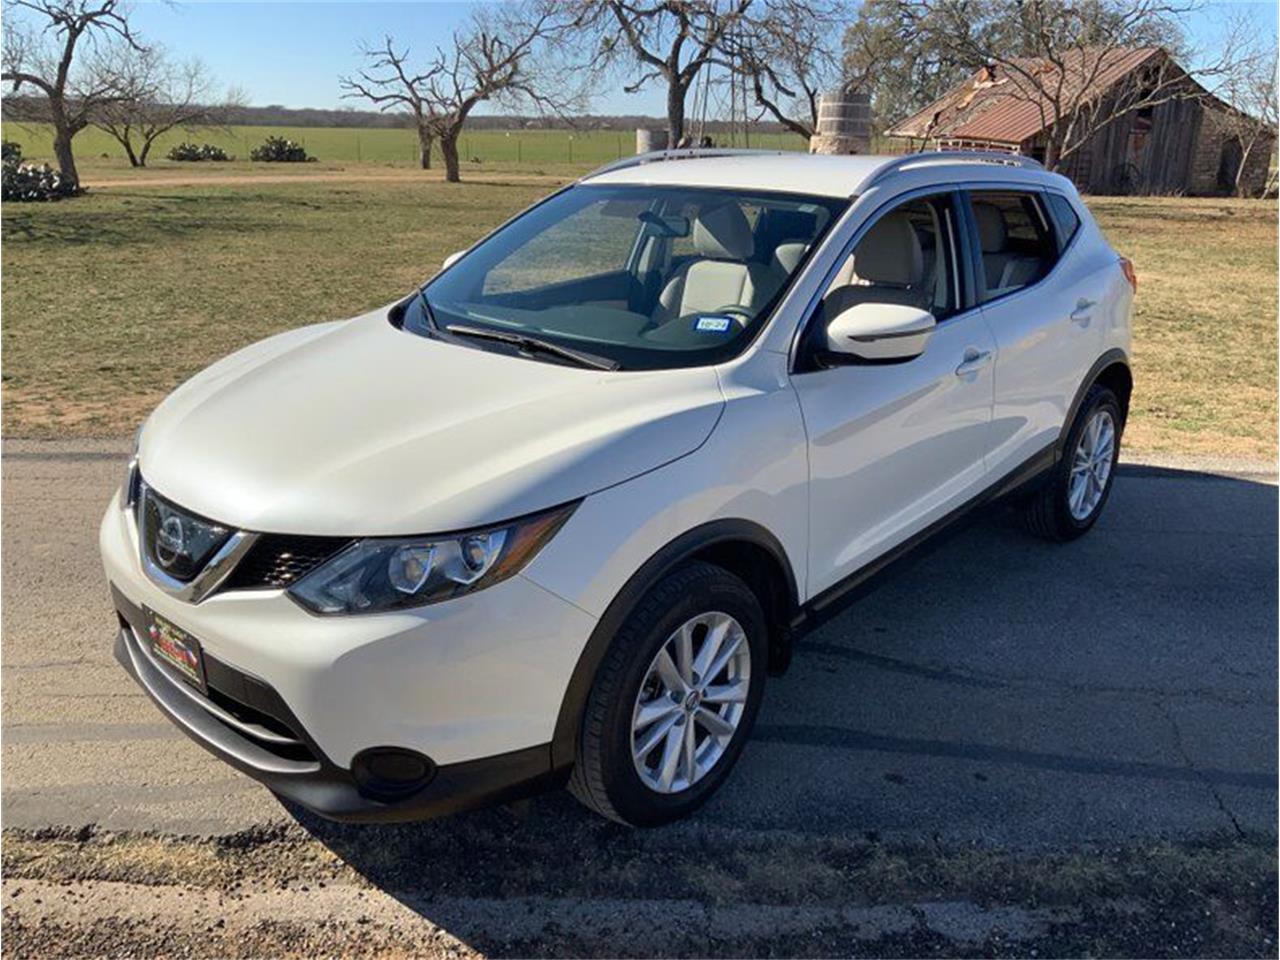 For Sale: 2018 Nissan Rogue in Fredericksburg, Texas for sale in Fredericksburg, TX